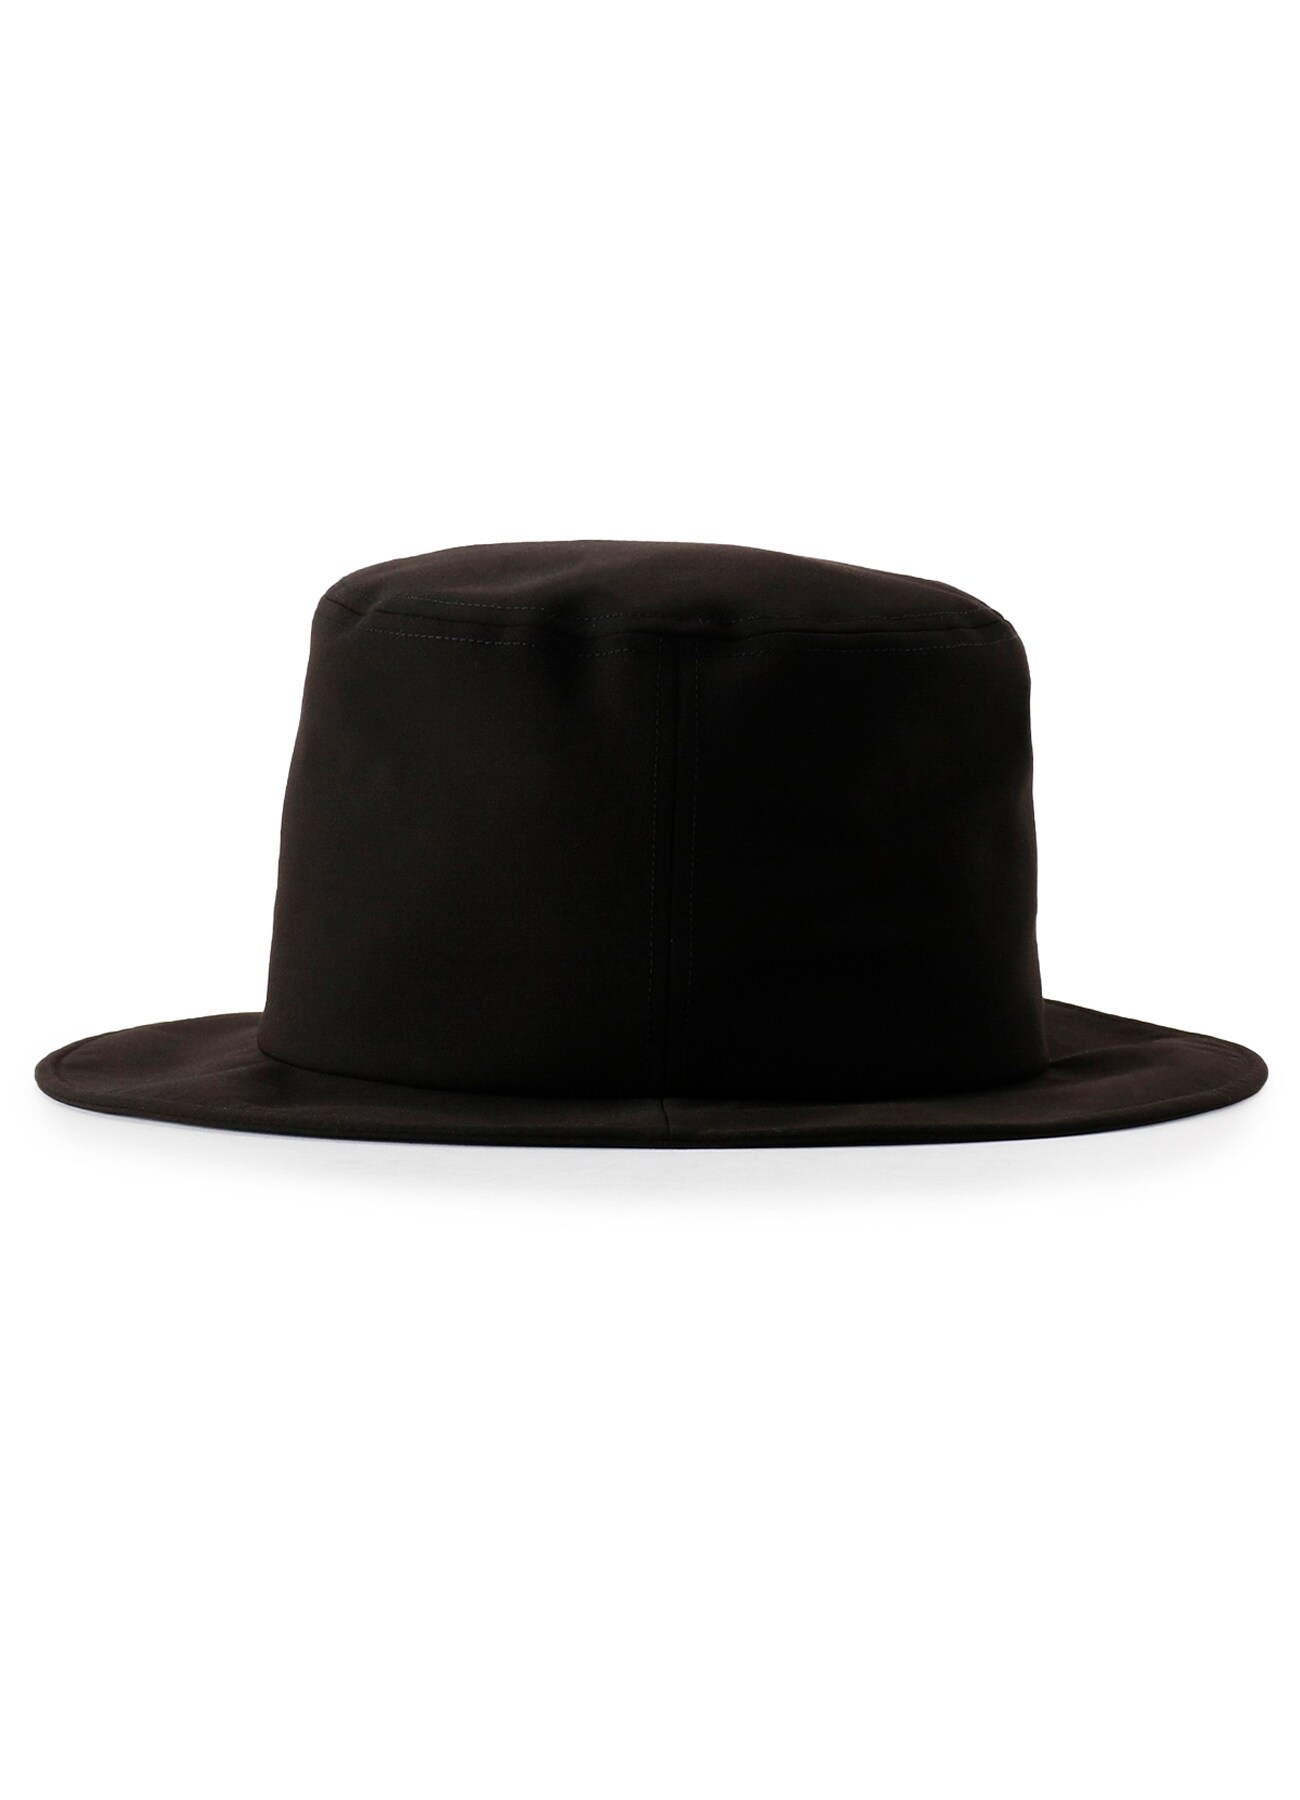 Pe/Rayon Gabardine Stretch Flat Top Circular Hat